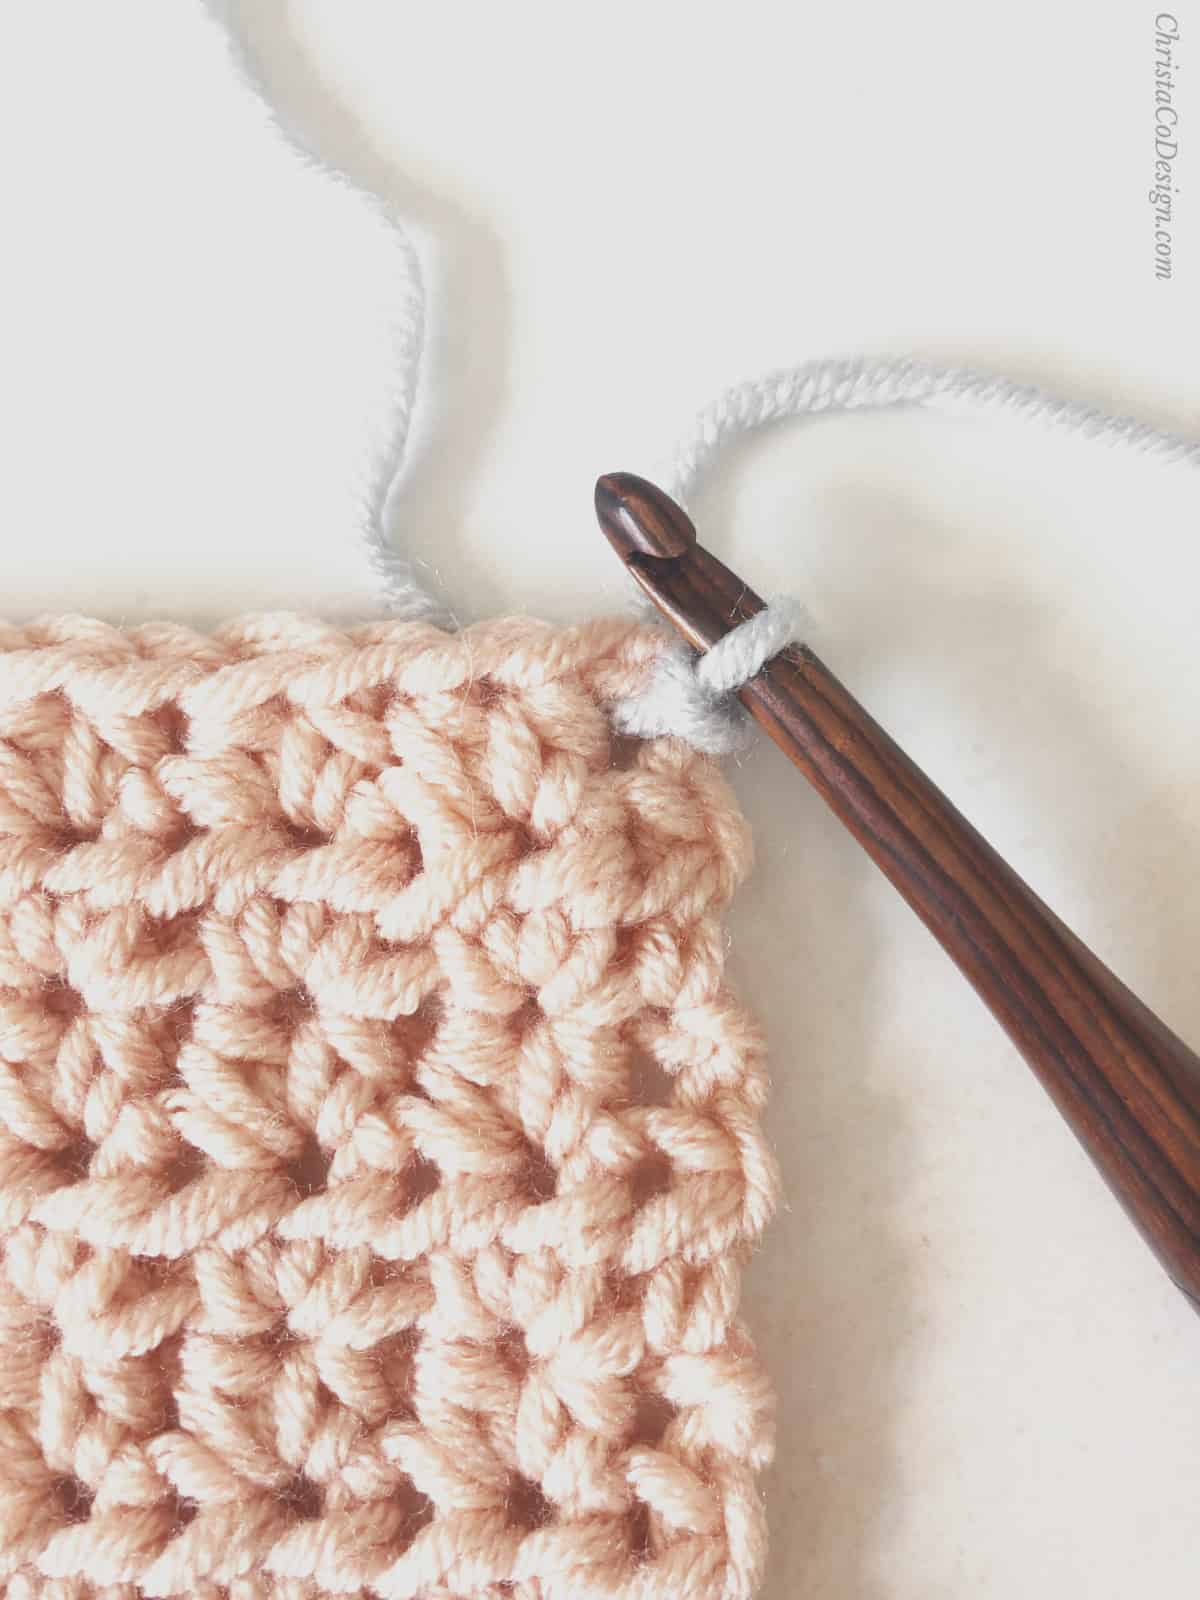 Joining grey yarn by pulling through on crochet blanket.